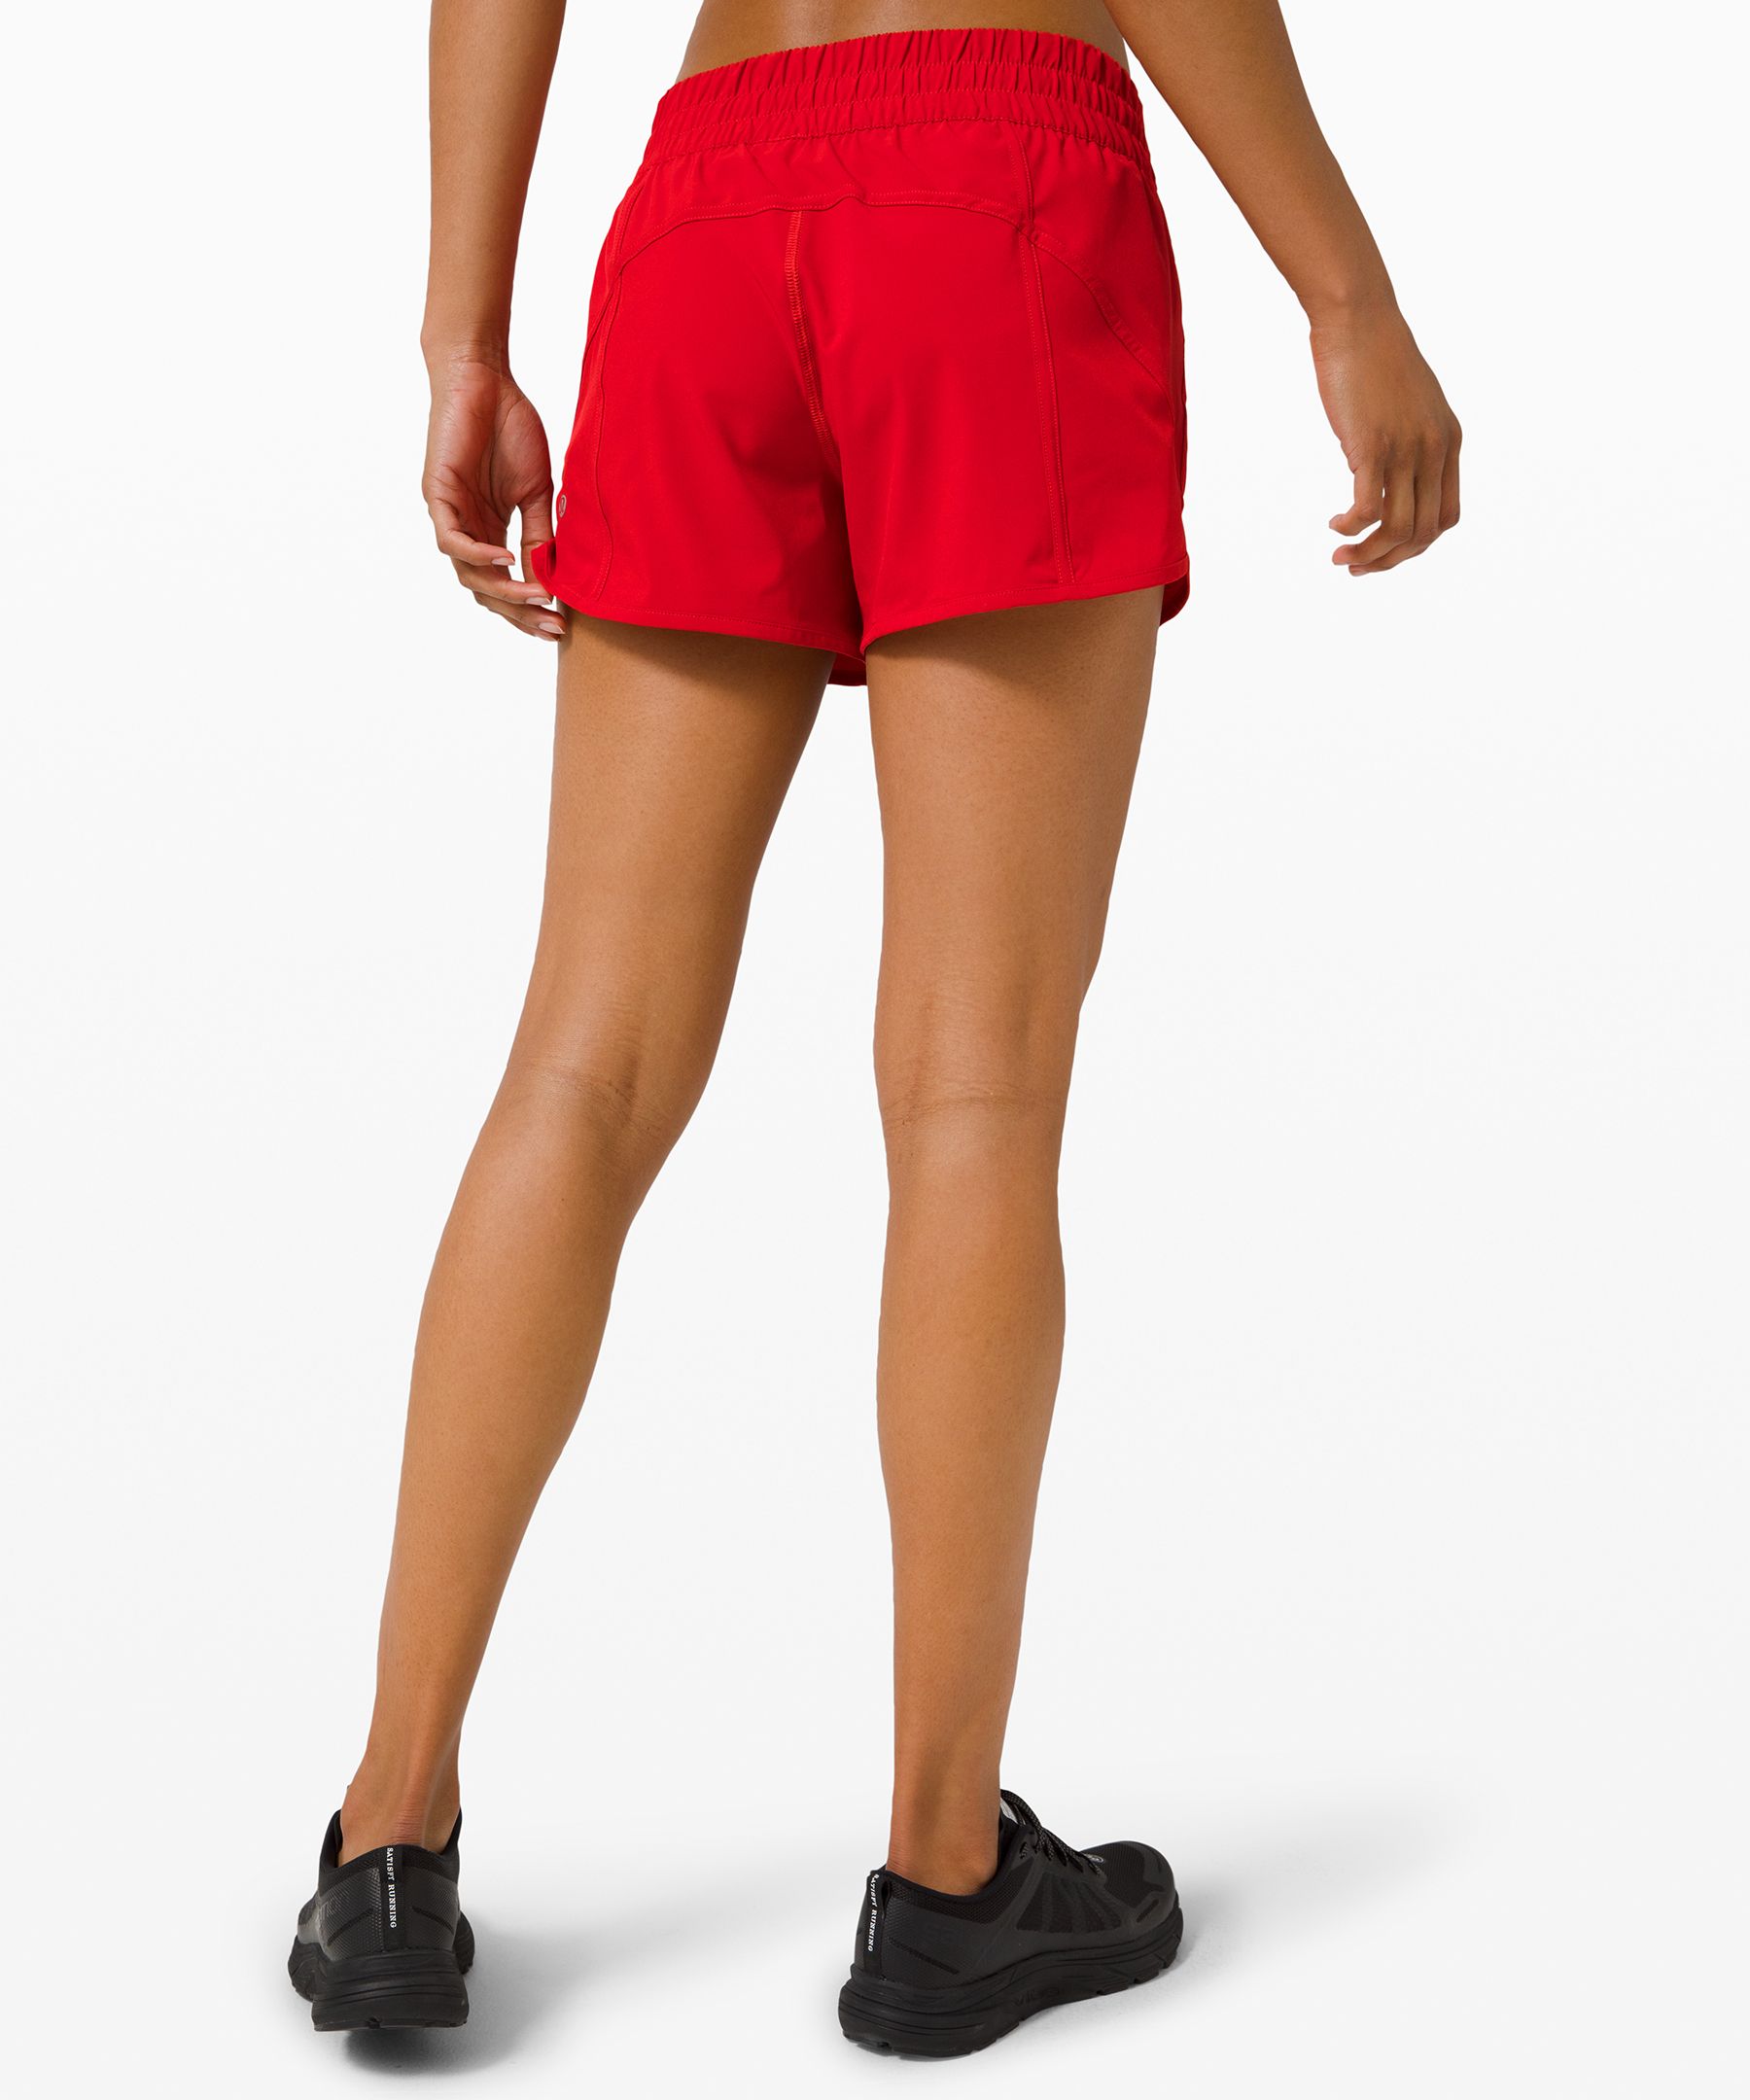 red lululemon shorts women's